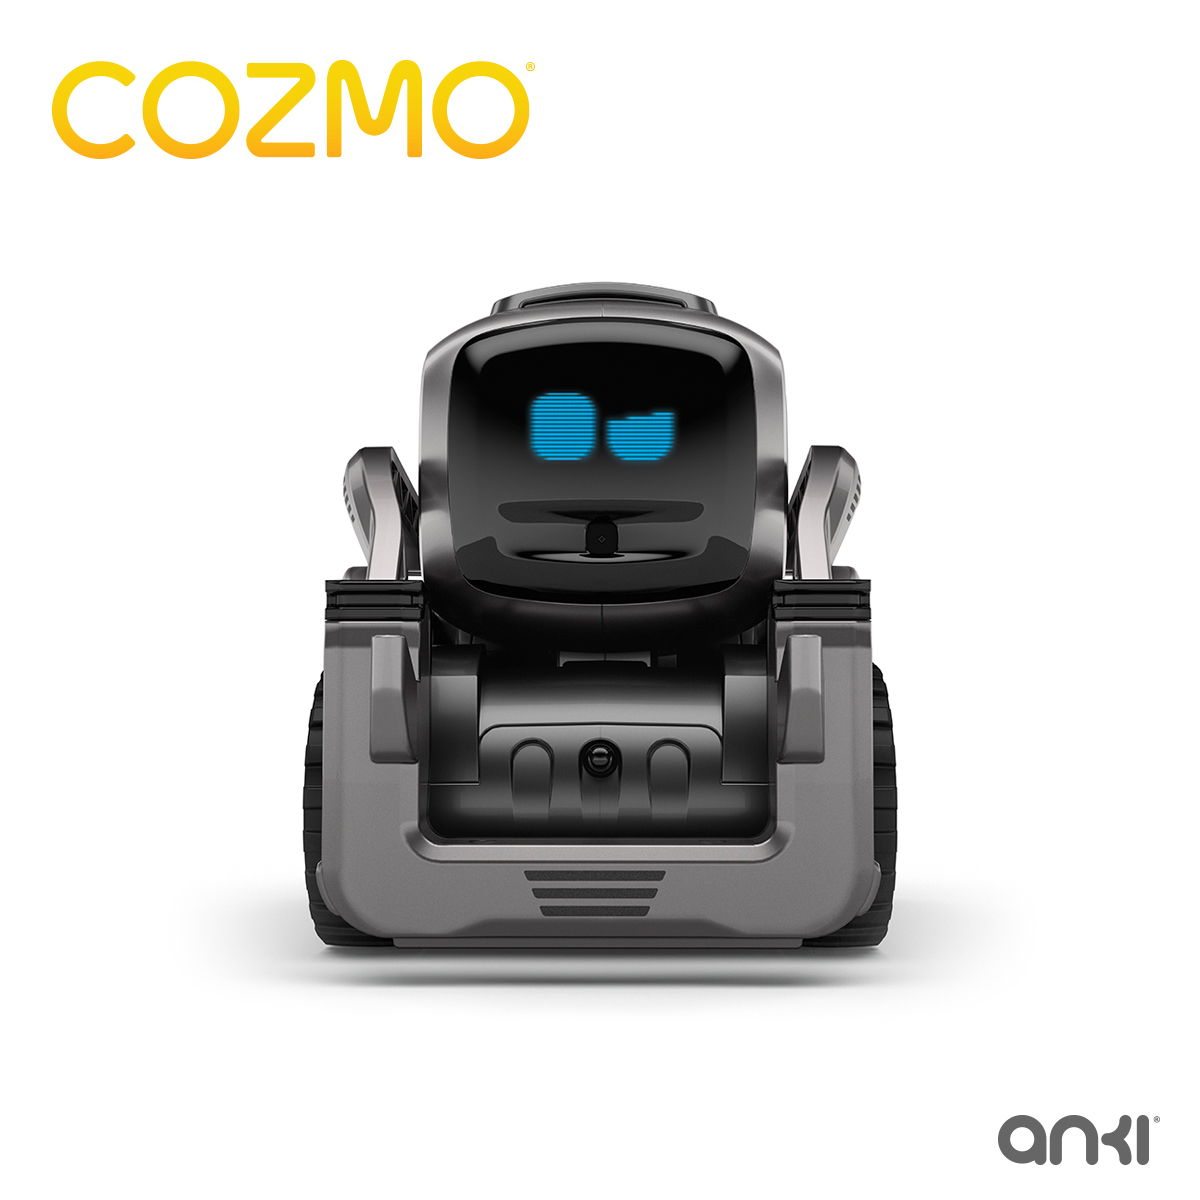 Cozmo the robot 